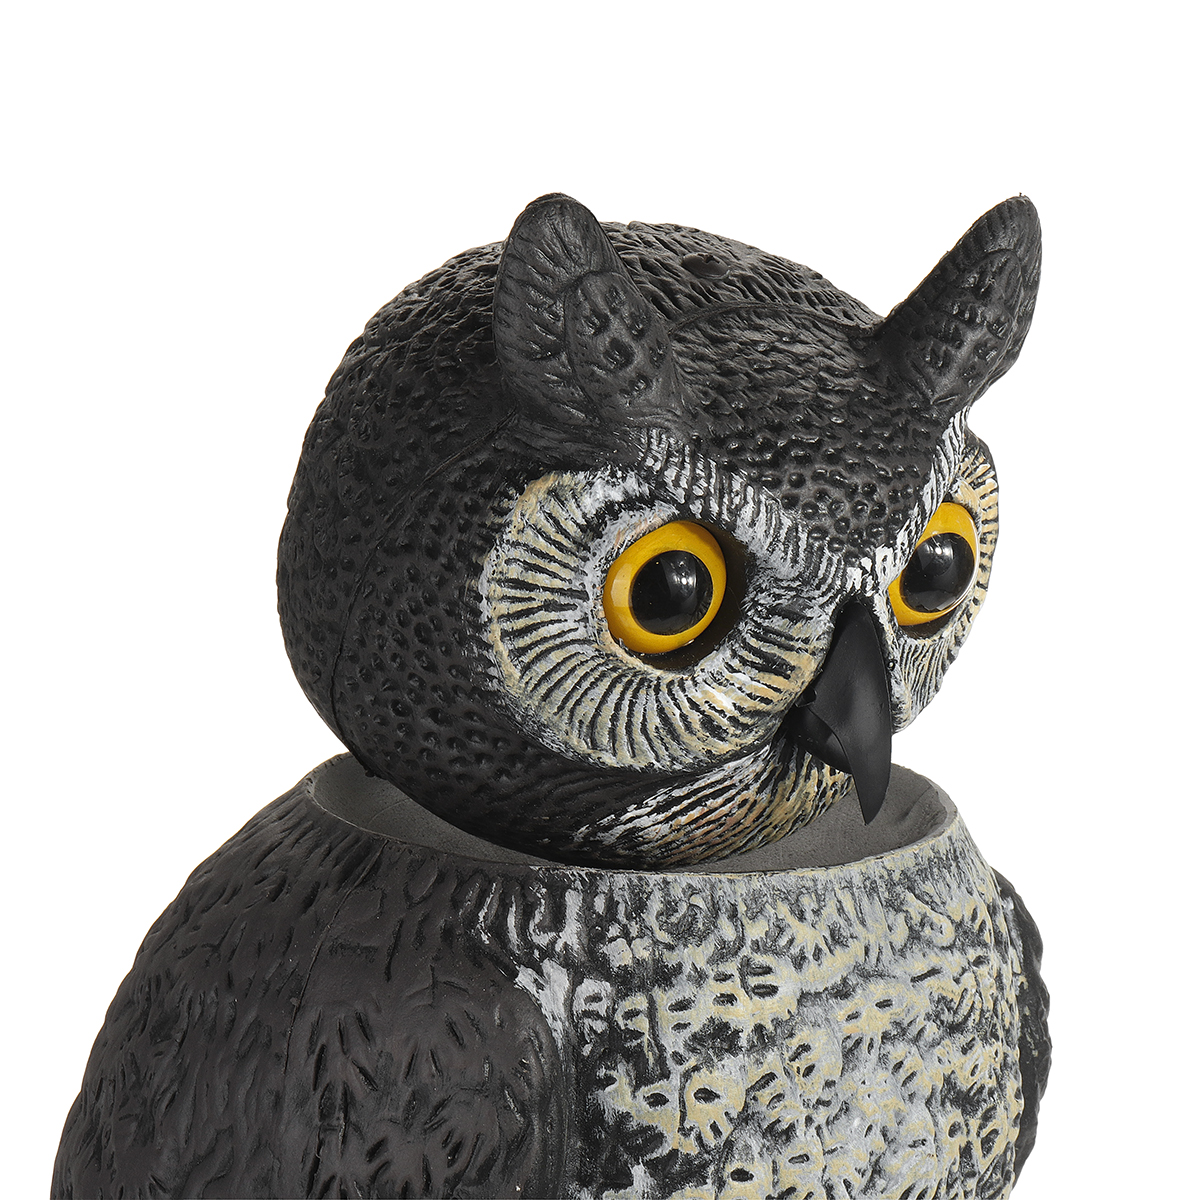 Rotating-Head-Owl-Decoy-Protection-Repellent-Bird-Pest-Control-Scarecrow-Garden-Yard-Decorations-1461479-6